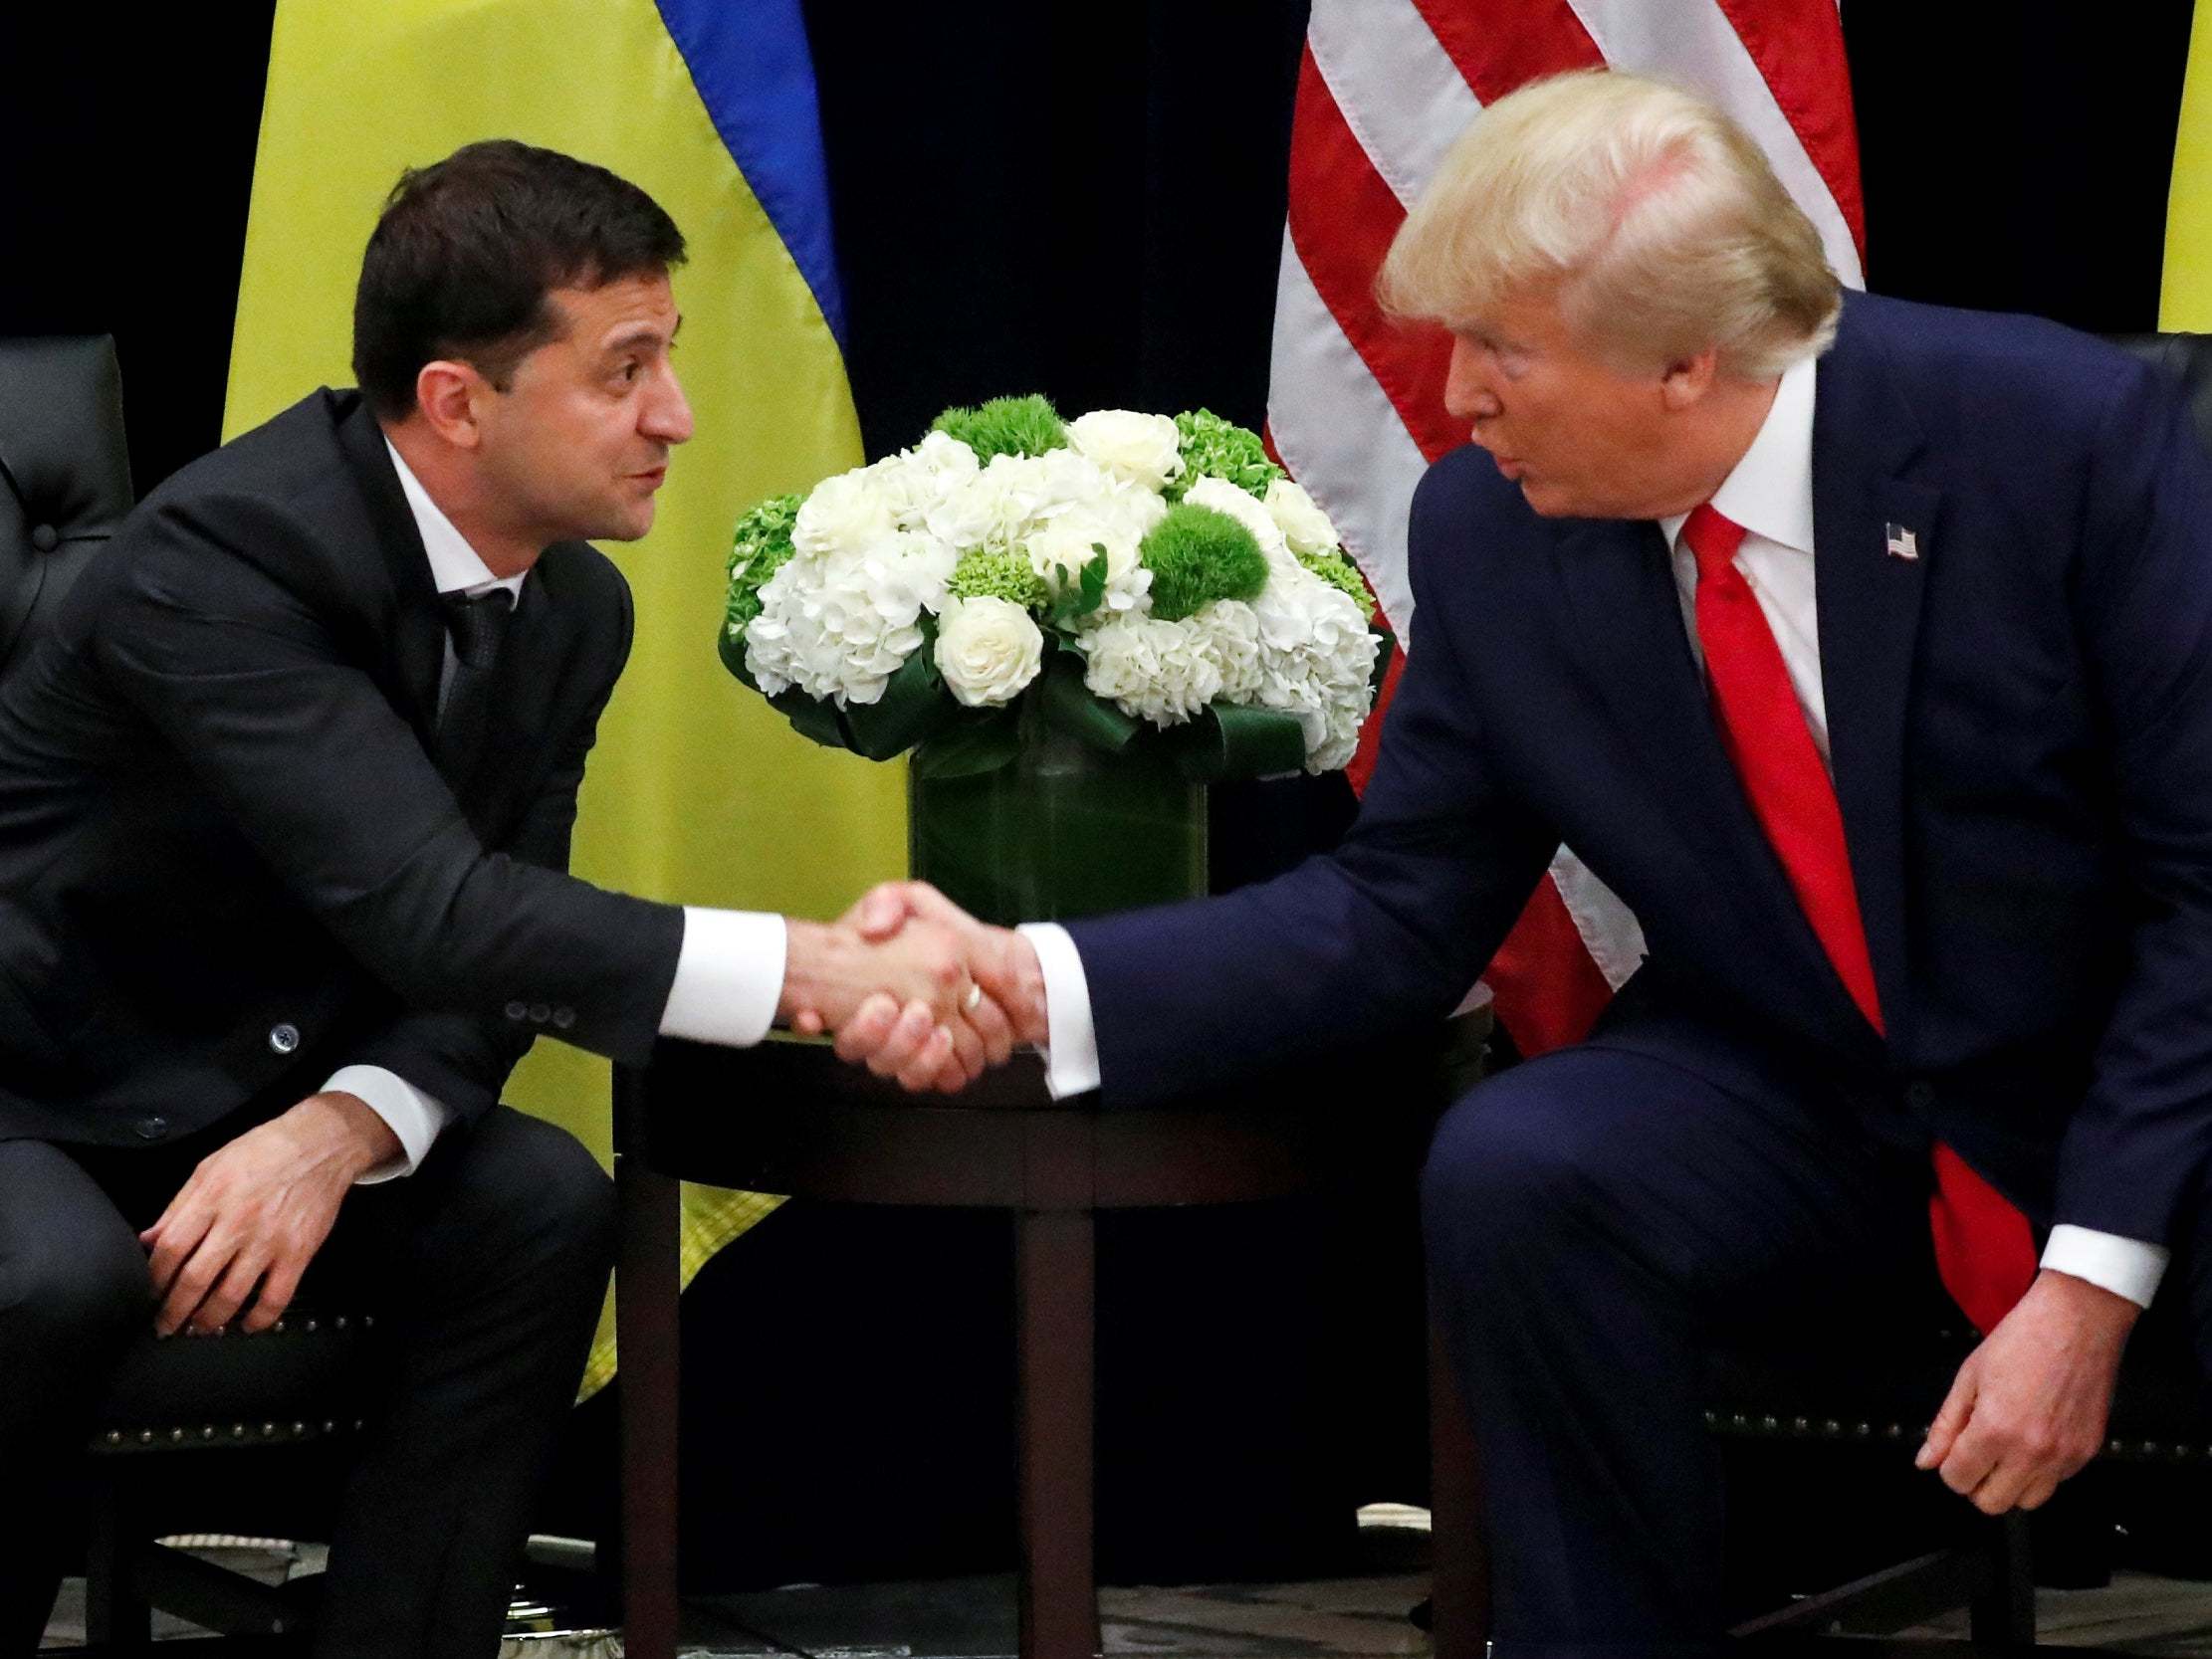 Ukraine’s president Volodymyr Zelenskiy greets Donald Trump during September’s UN General Assembly in New York